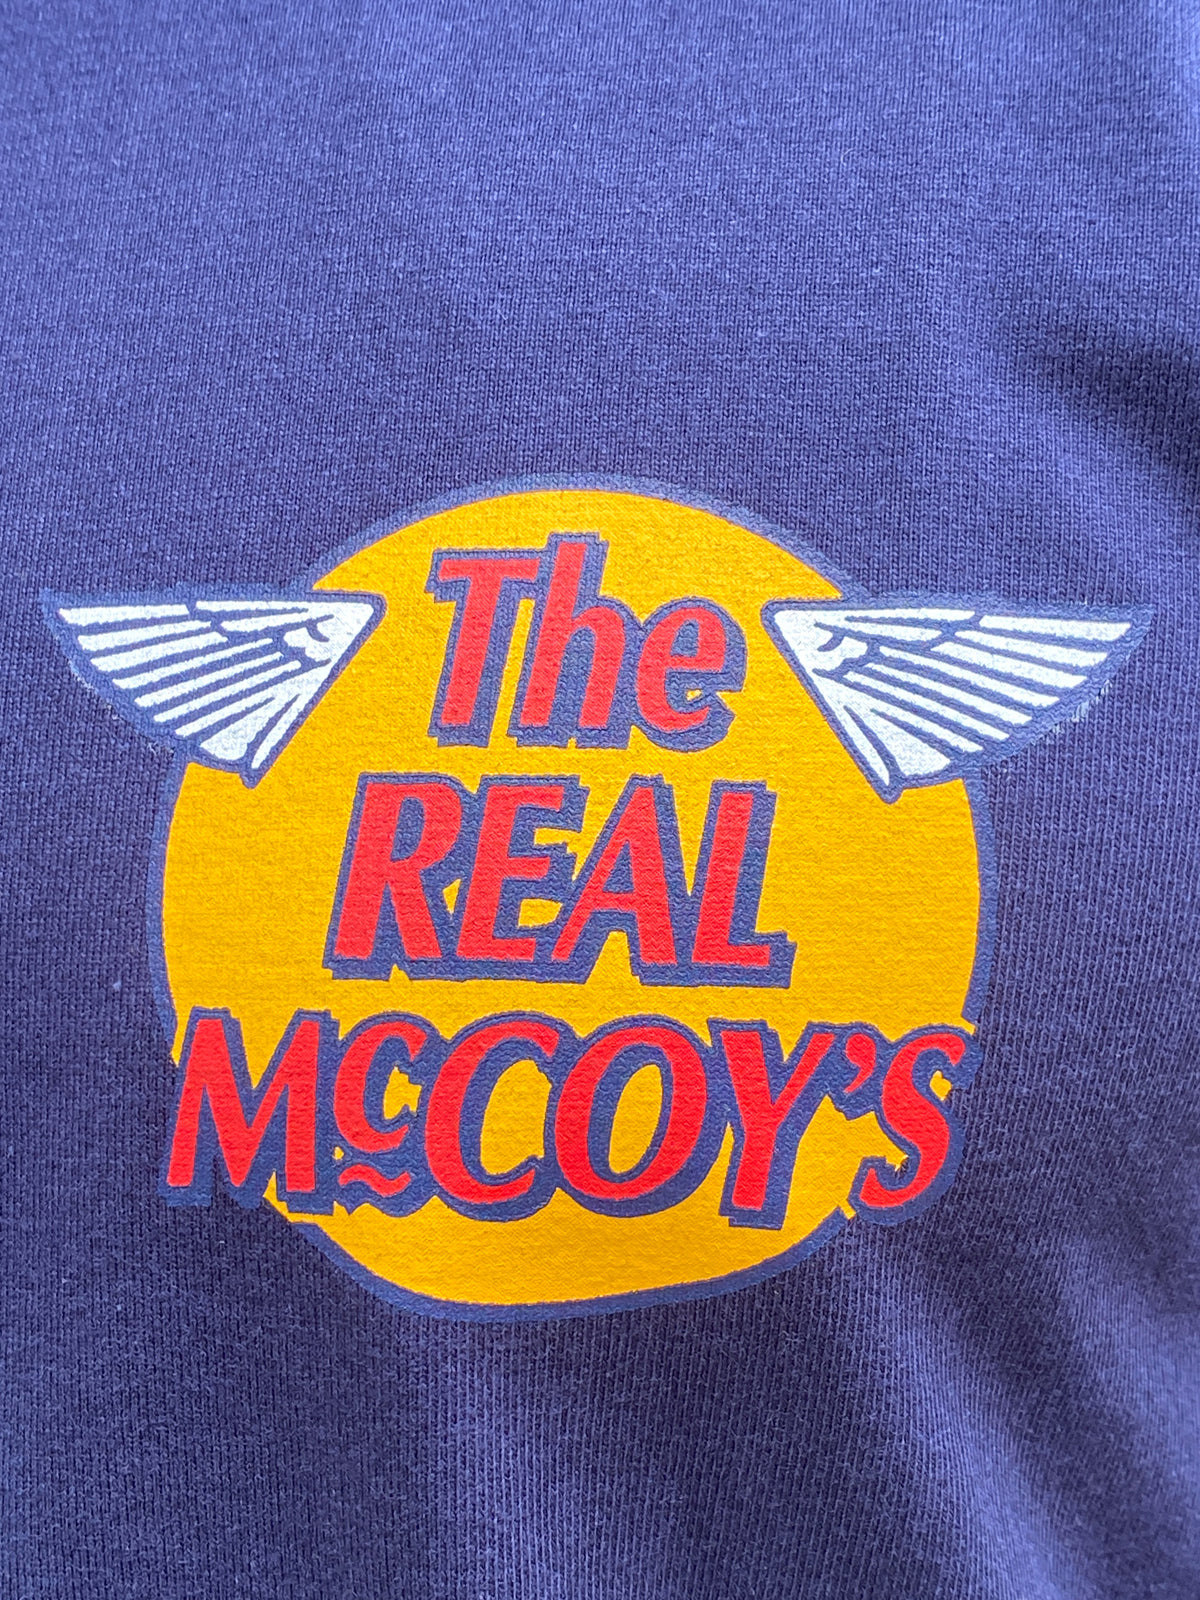 The Real McCoy's MC20002 Logo Tee L/S Navy